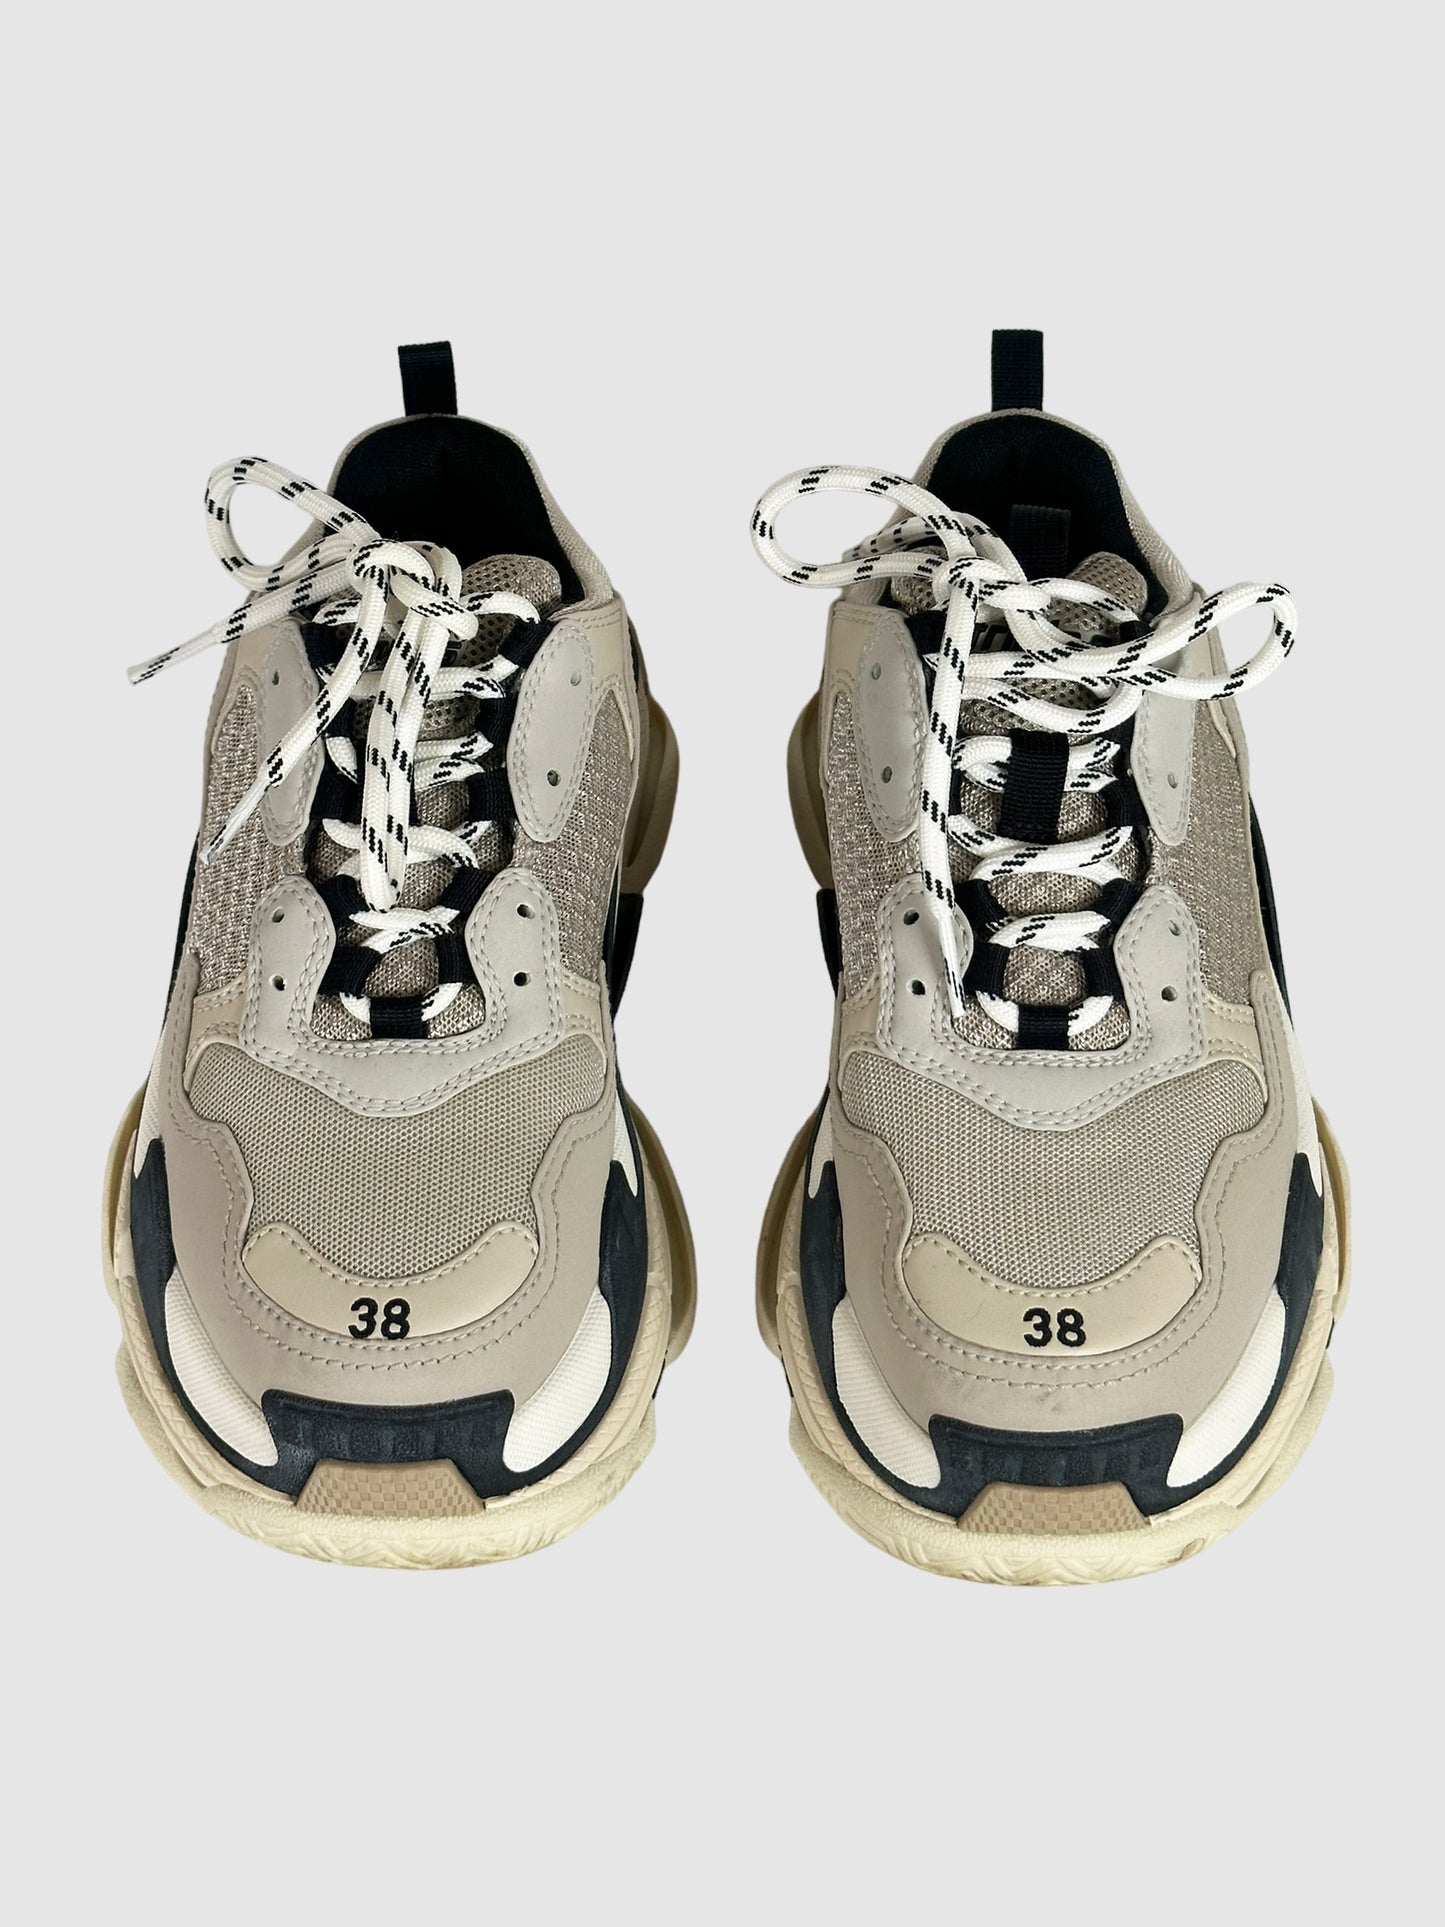 Balenciaga Triple S Chunky Sneakers - Size 38